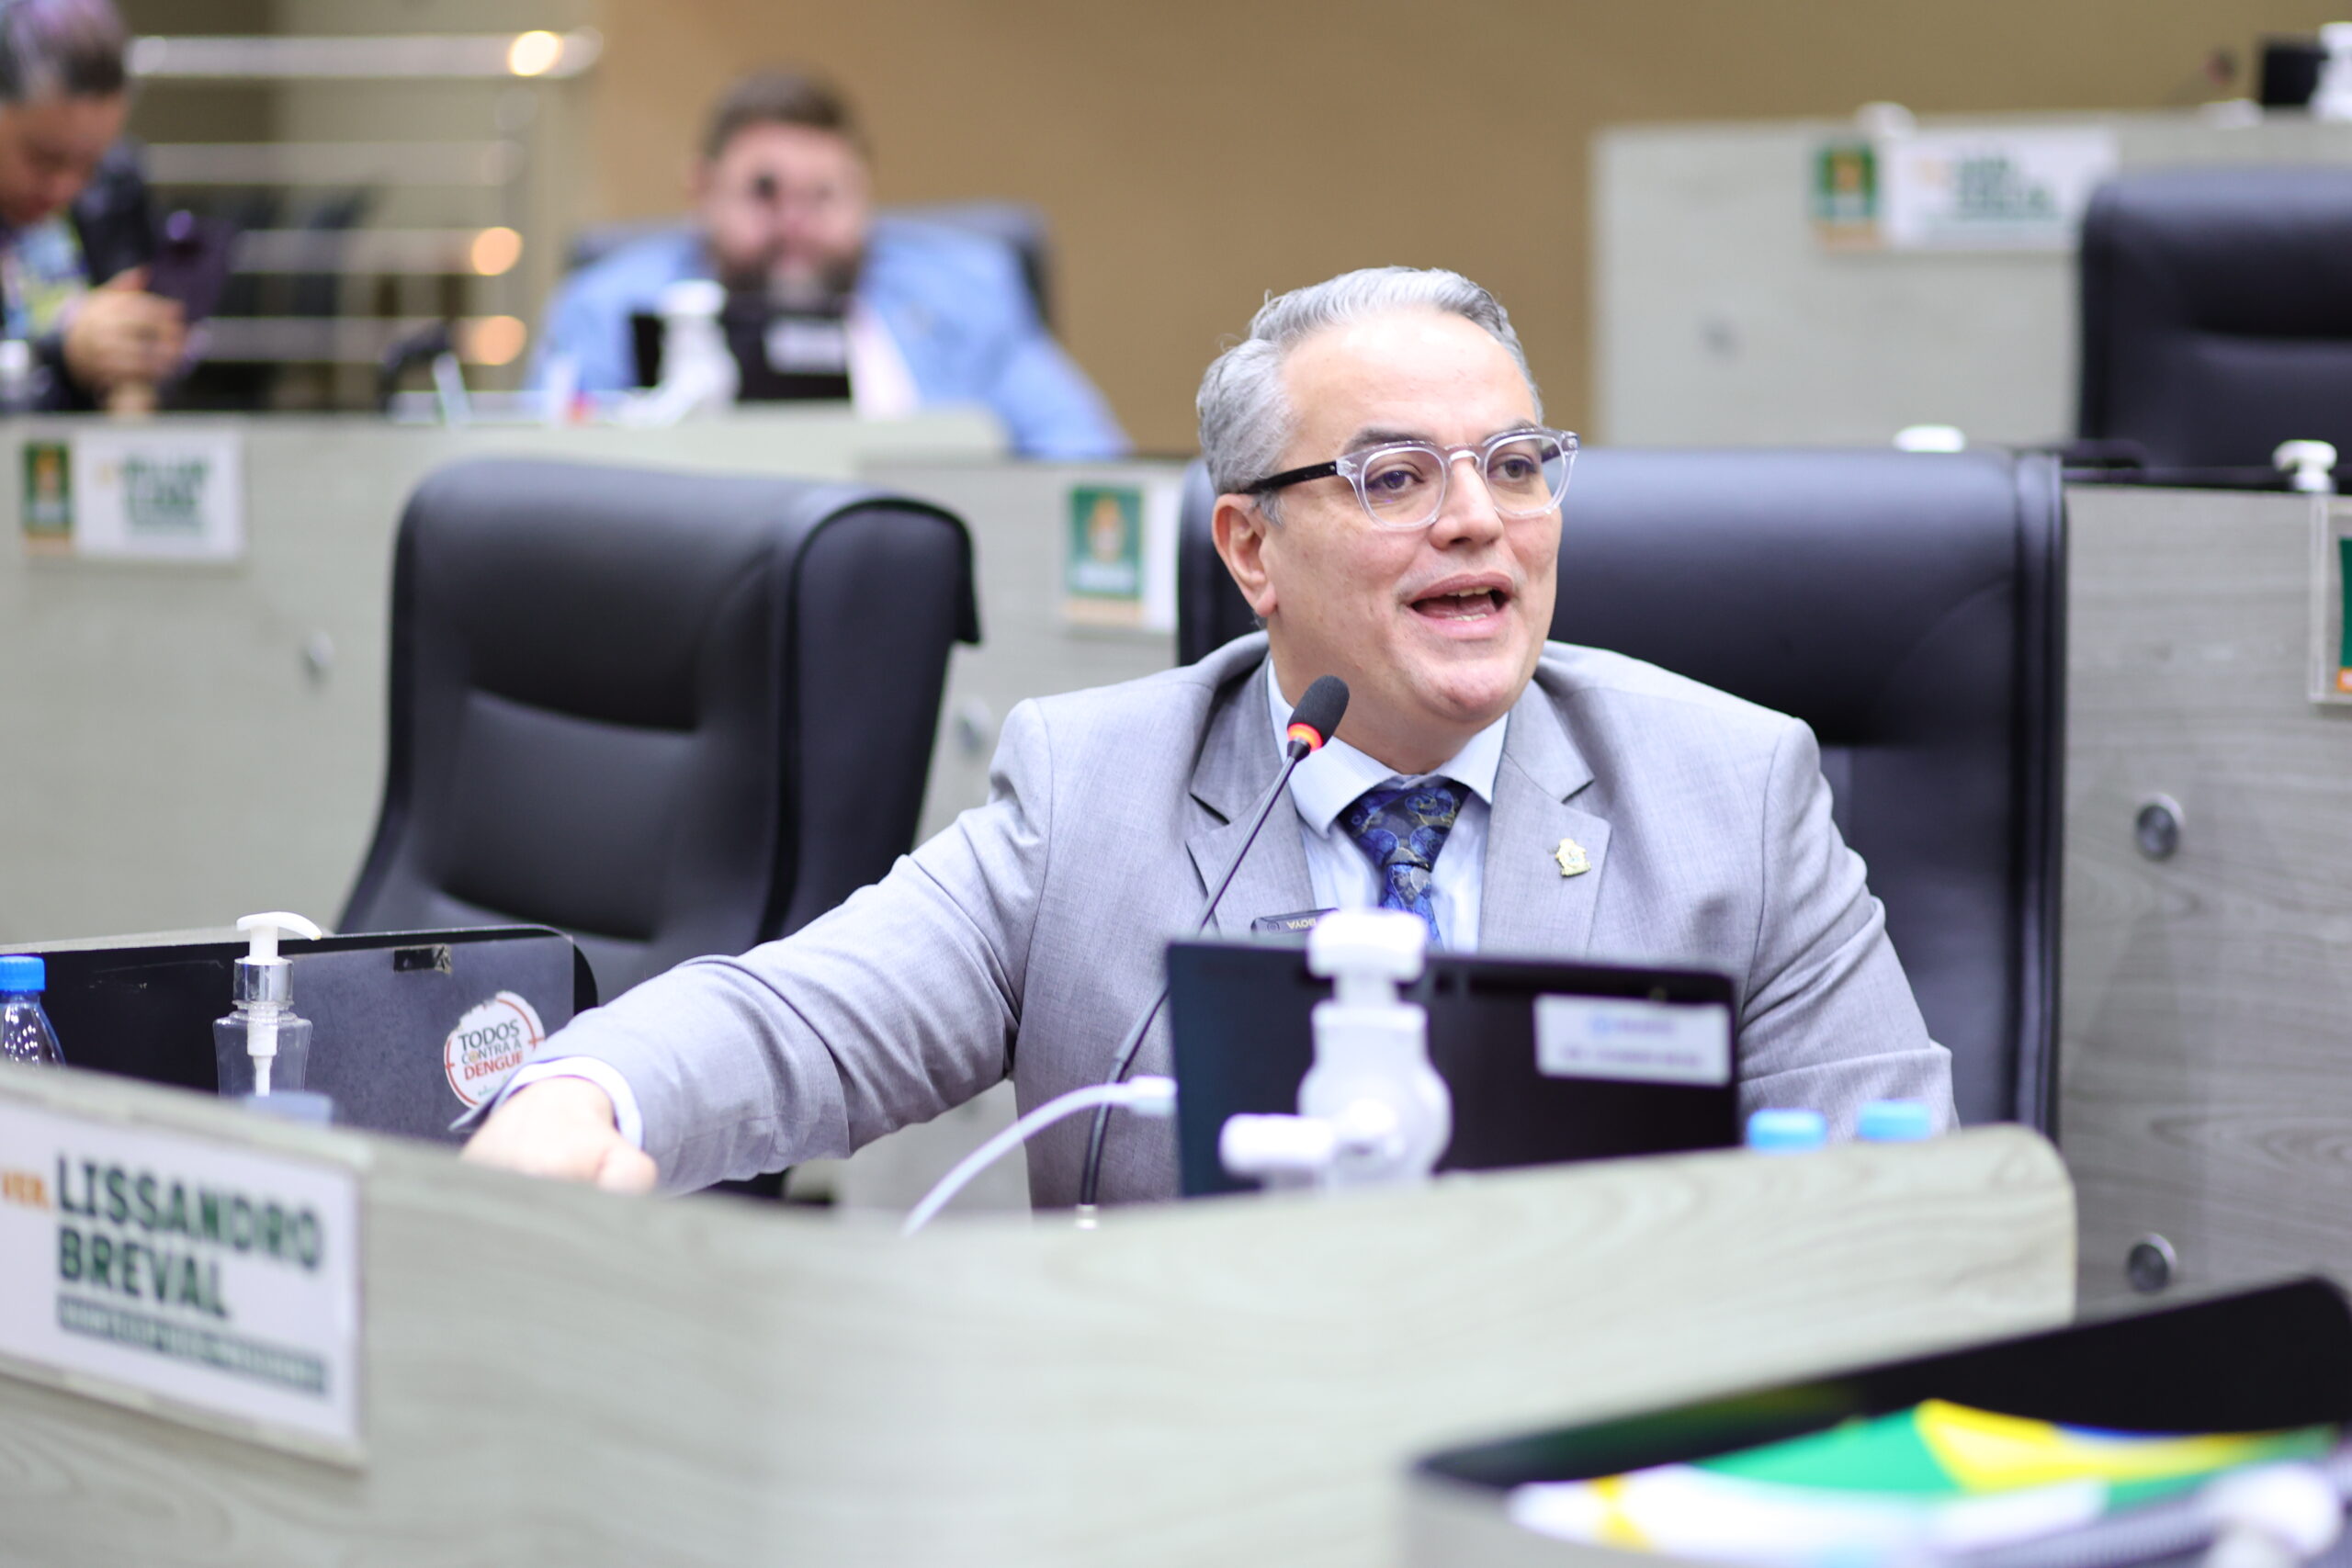 Lissandro Breval denuncia descaso com o Centro de Manaus 